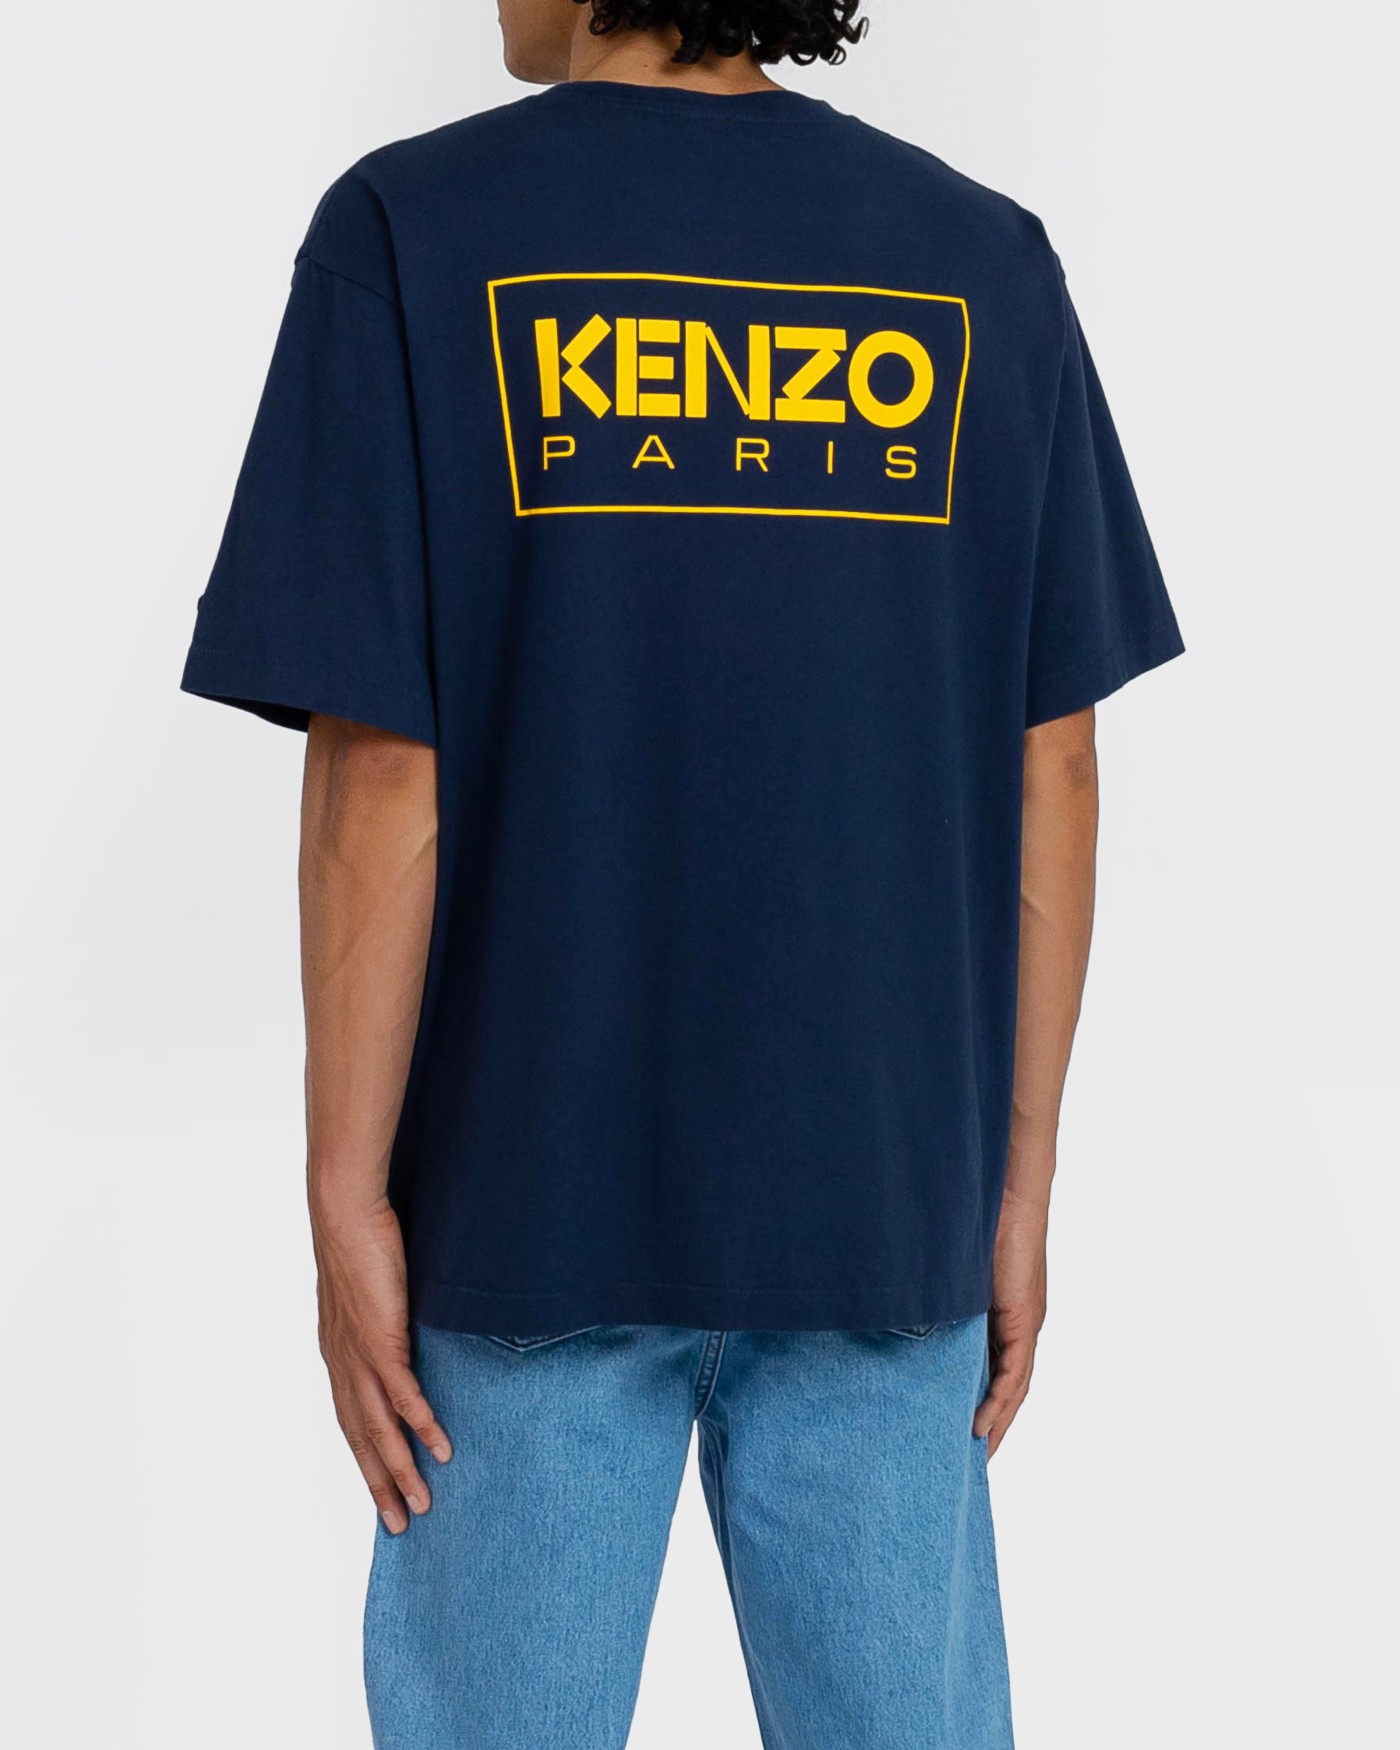 Kenzo Camiseta Kenzo Paris Oversized Azul Marino